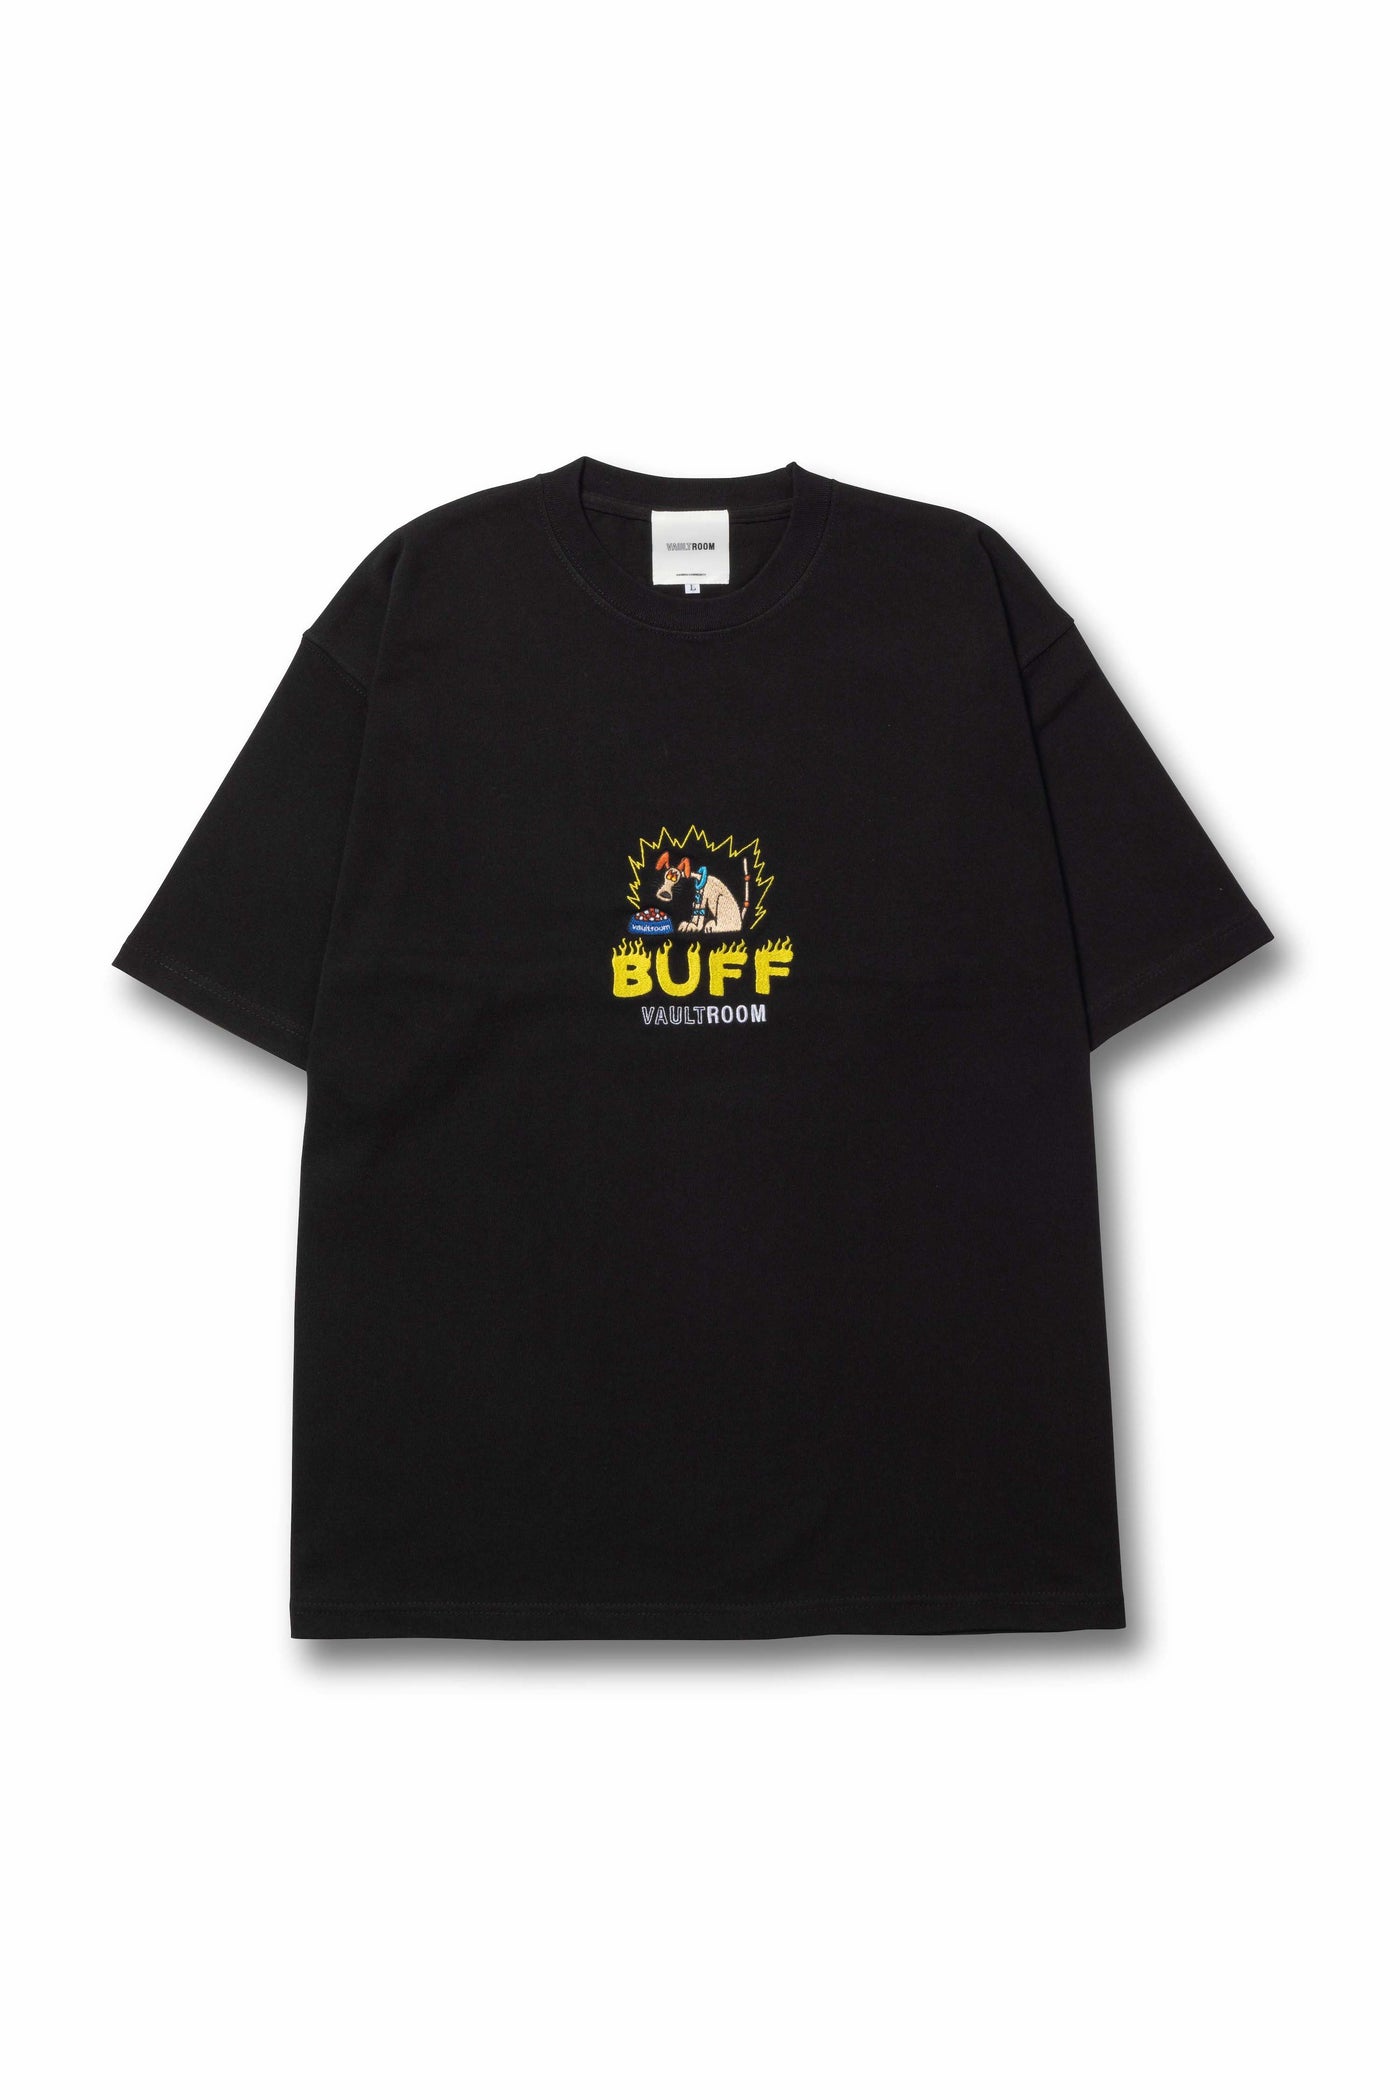 vaultroom buff TEE Tシャツ | birraquepersianas.com.br